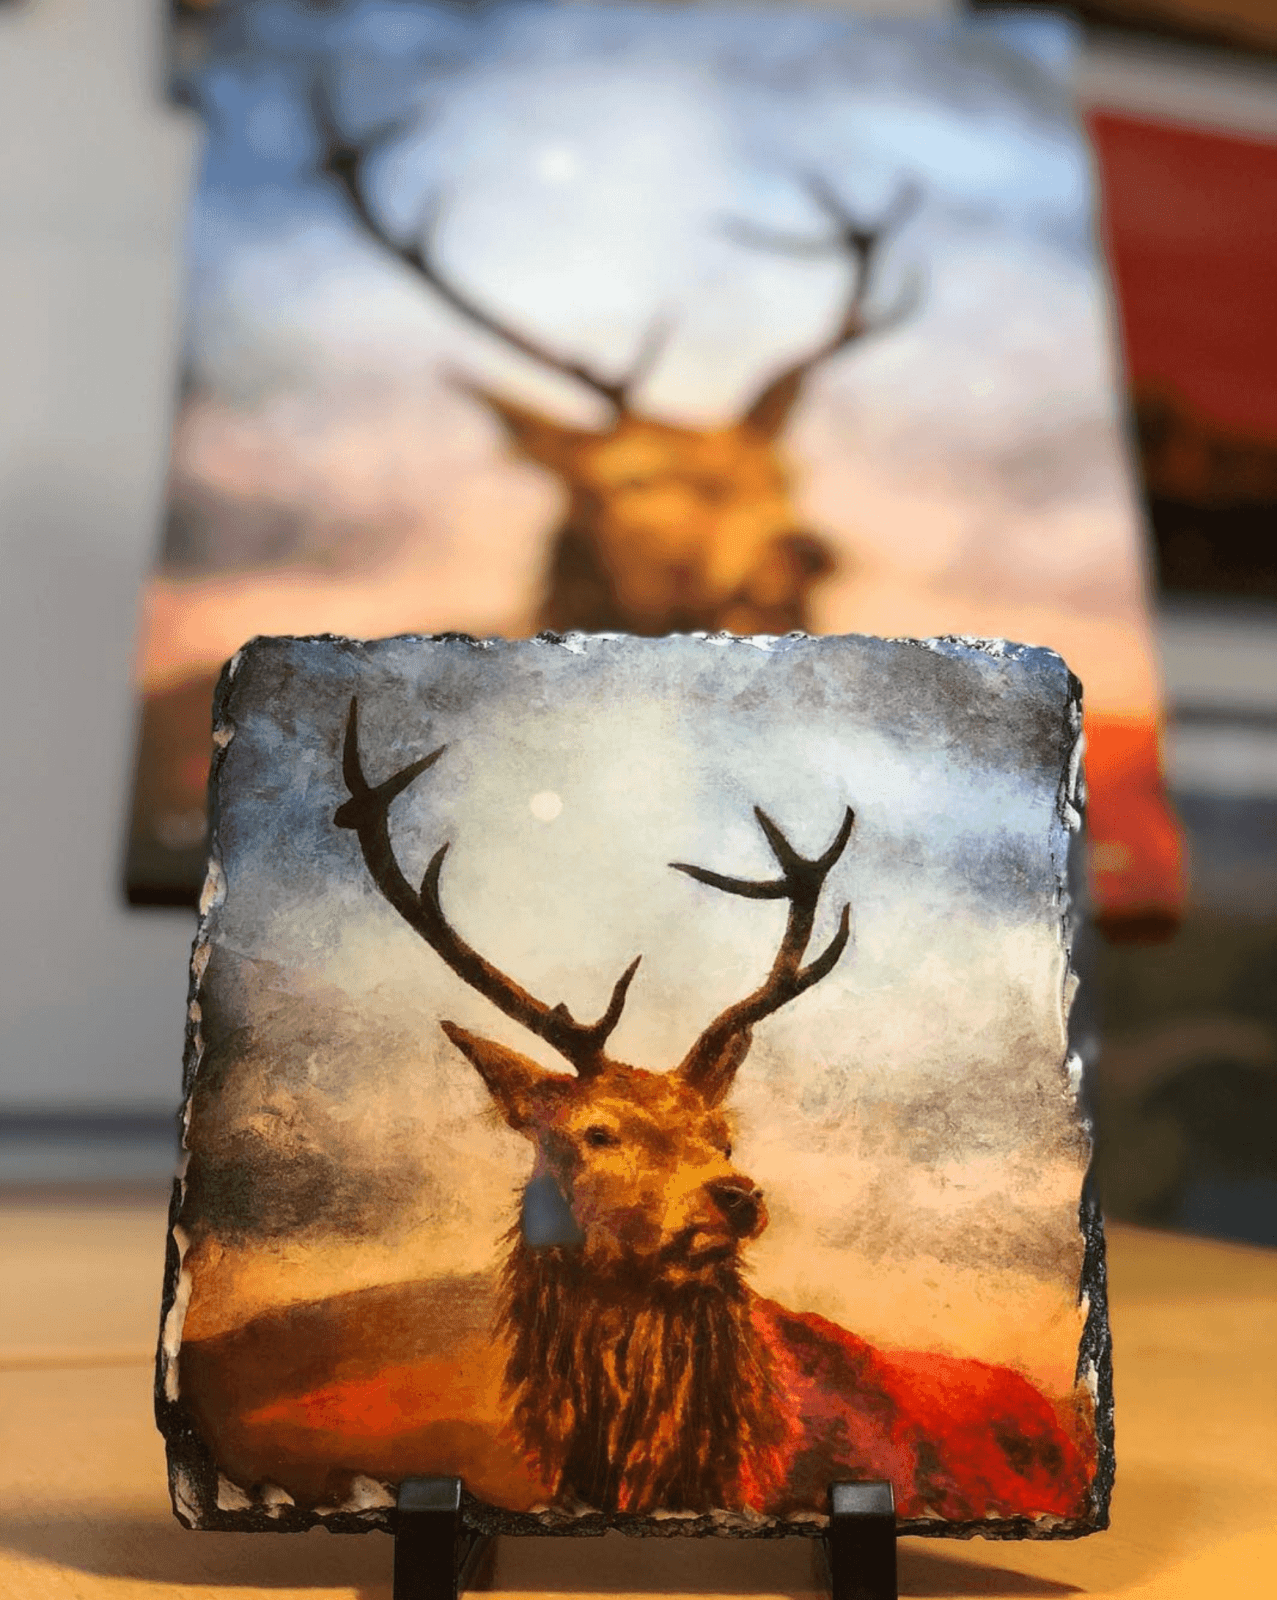 Sunset Over Gourock Scottish Slate Art-Slate Art-River Clyde Art Gallery-Paintings, Prints, Homeware, Art Gifts From Scotland By Scottish Artist Kevin Hunter